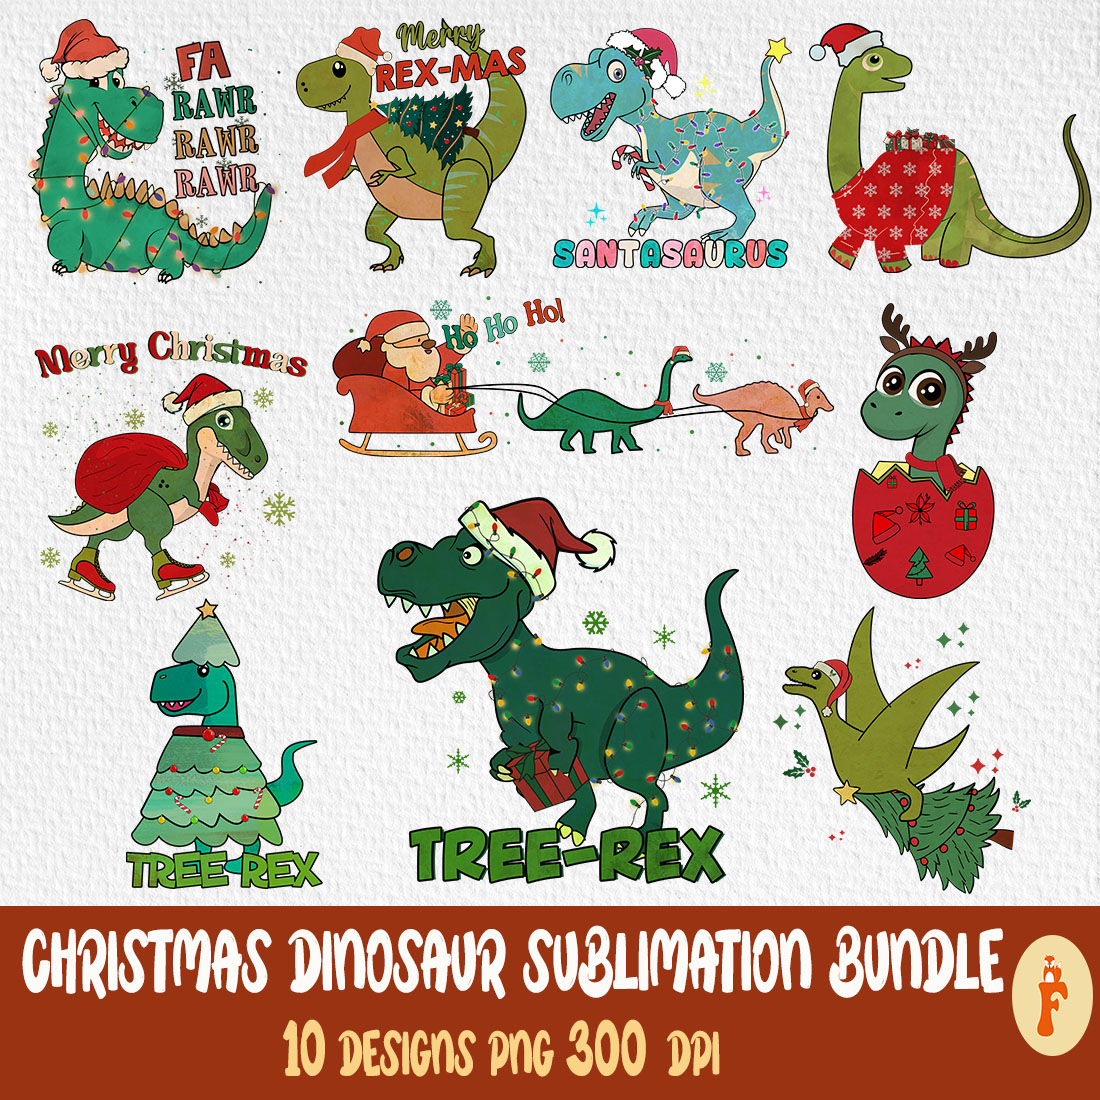 Best Christmas Dinosaur Sublimation T-Shirt Designs cover image.